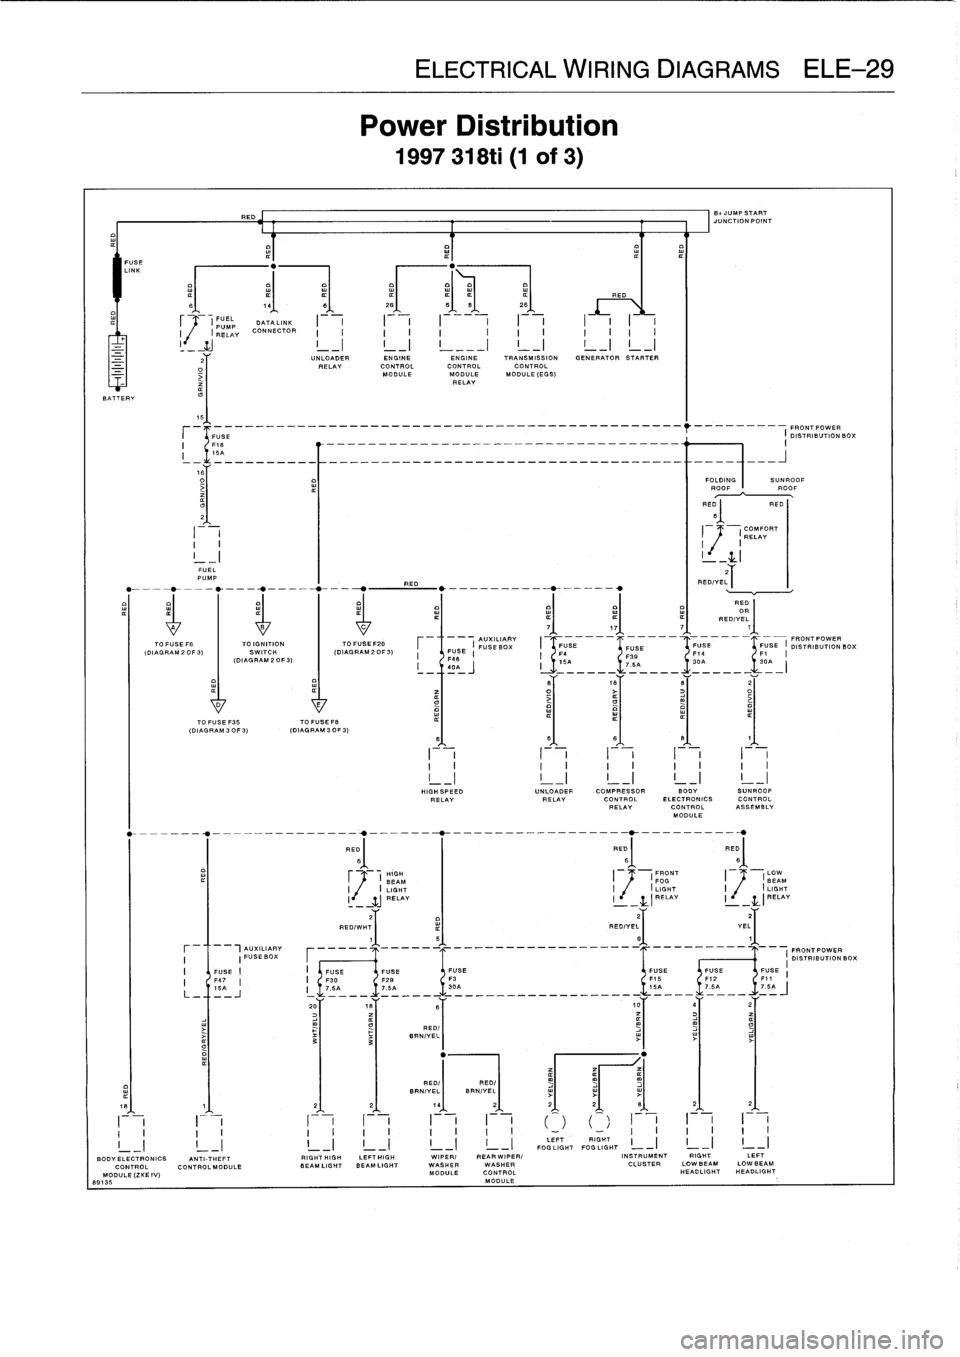 BMW 328i 1995 E36 Service Manual 
FUSE
LINK

I
IRELAY
CONNECTOR
O
-
z
BATTERY

TO
FUSE
F6
(DIAGRAM
2
OF
3)

FUEL
PUMP

I
-
1
I
--
,I

	

I

	

I

	

I
_I
LI
BODY
ELECTRONICS

	

ANTI-THEFT
CONTROL
CONTROLMODULEMODULE
(ZKE
IV)
80135

